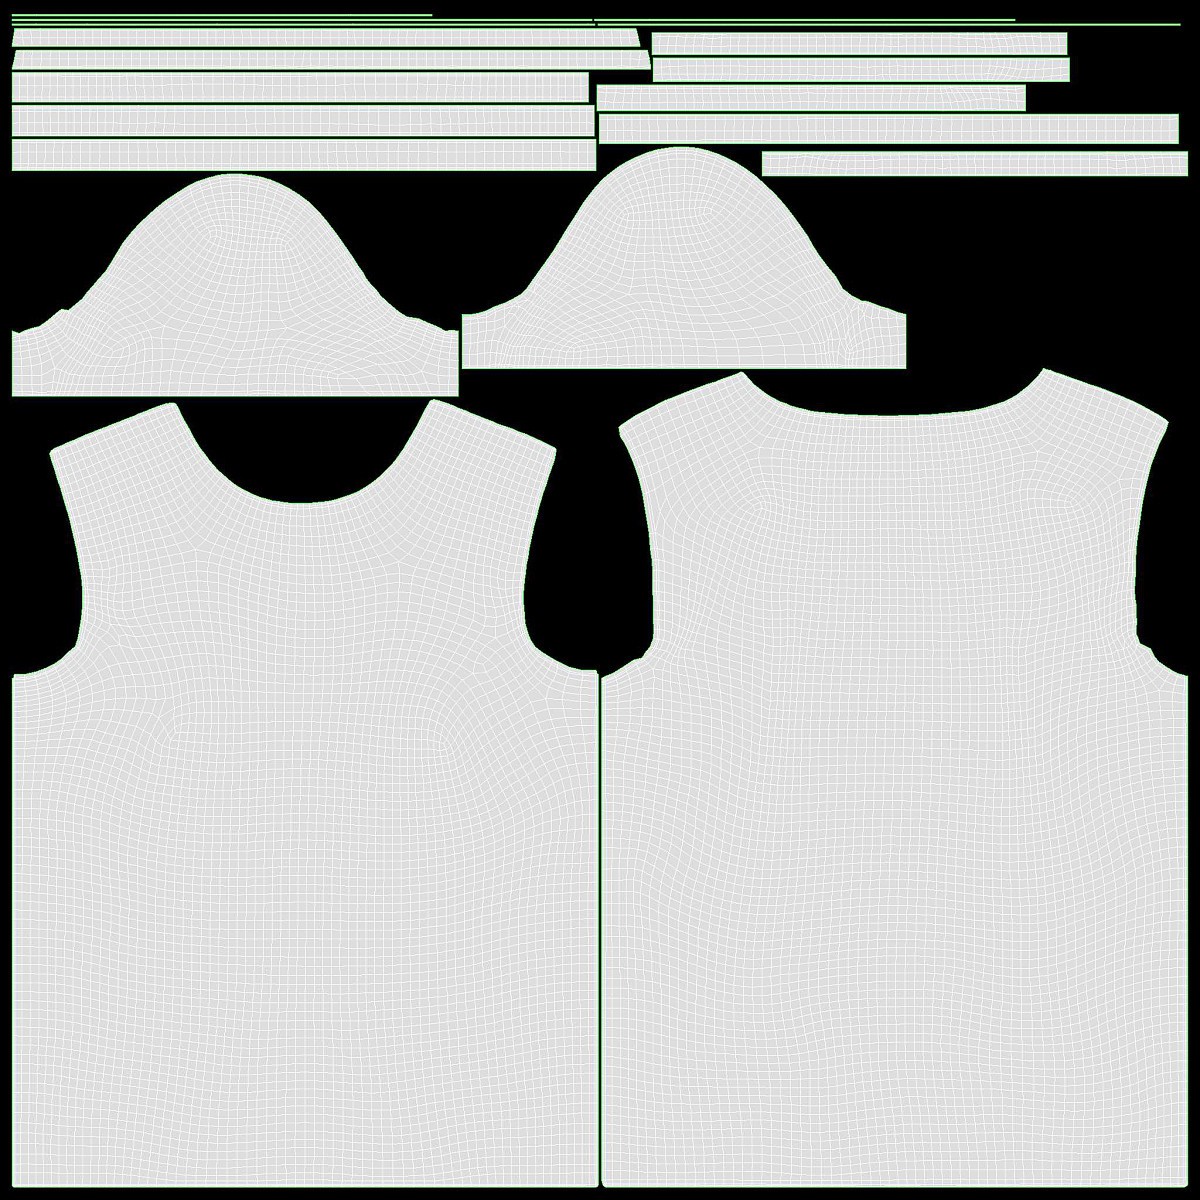 T-shirt for Men Mockup 01 Cotton White